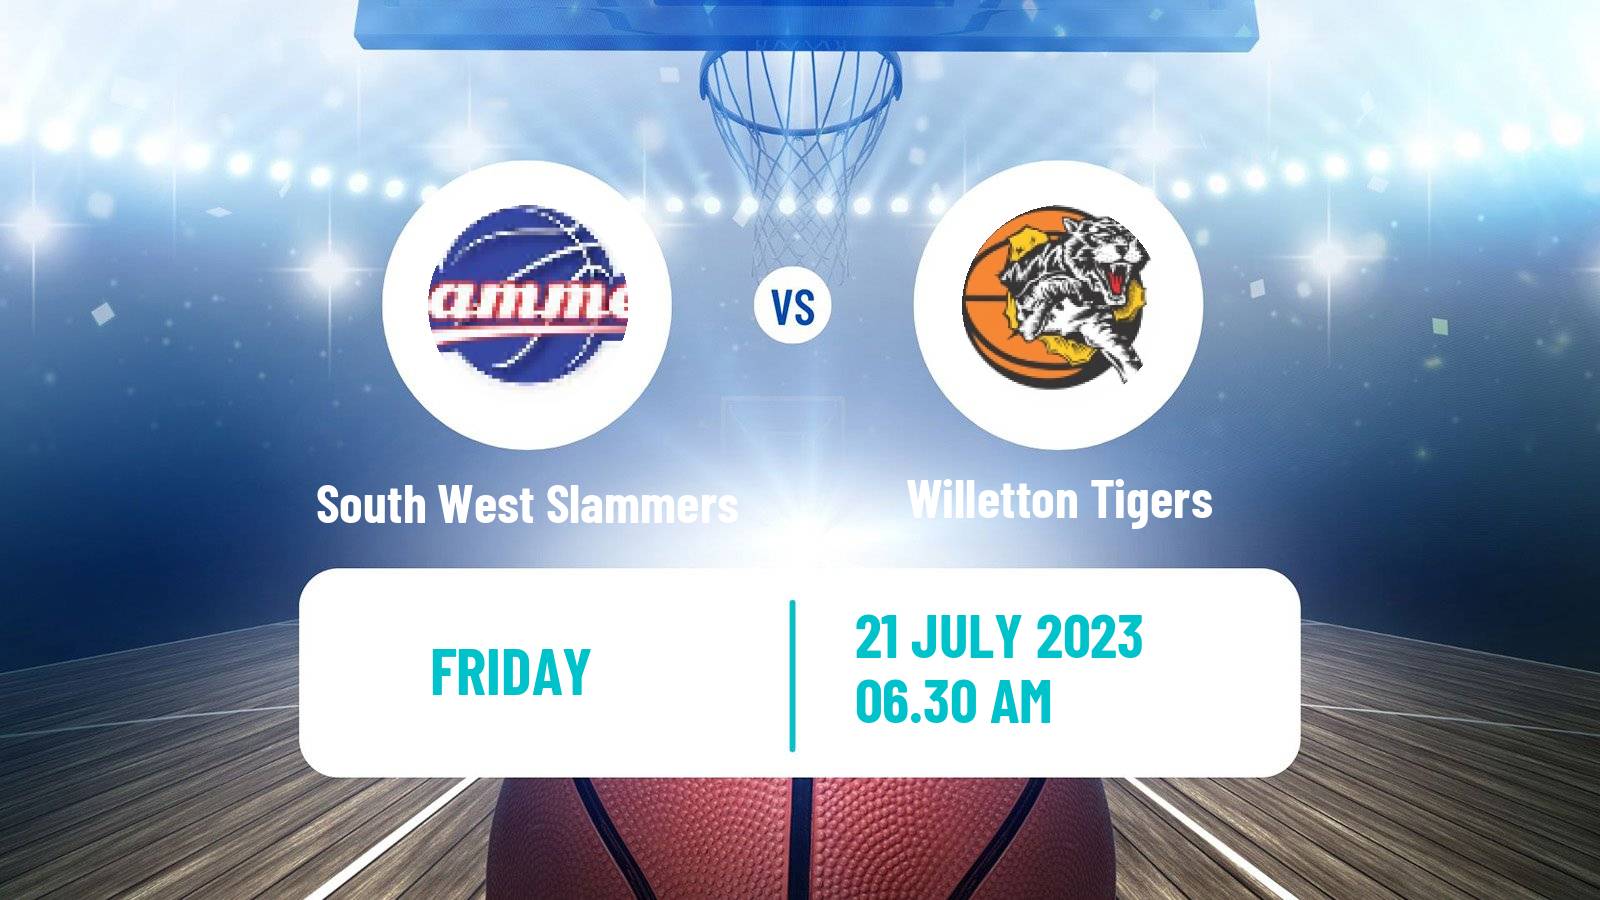 Basketball Australian NBL1 West South West Slammers - Willetton Tigers